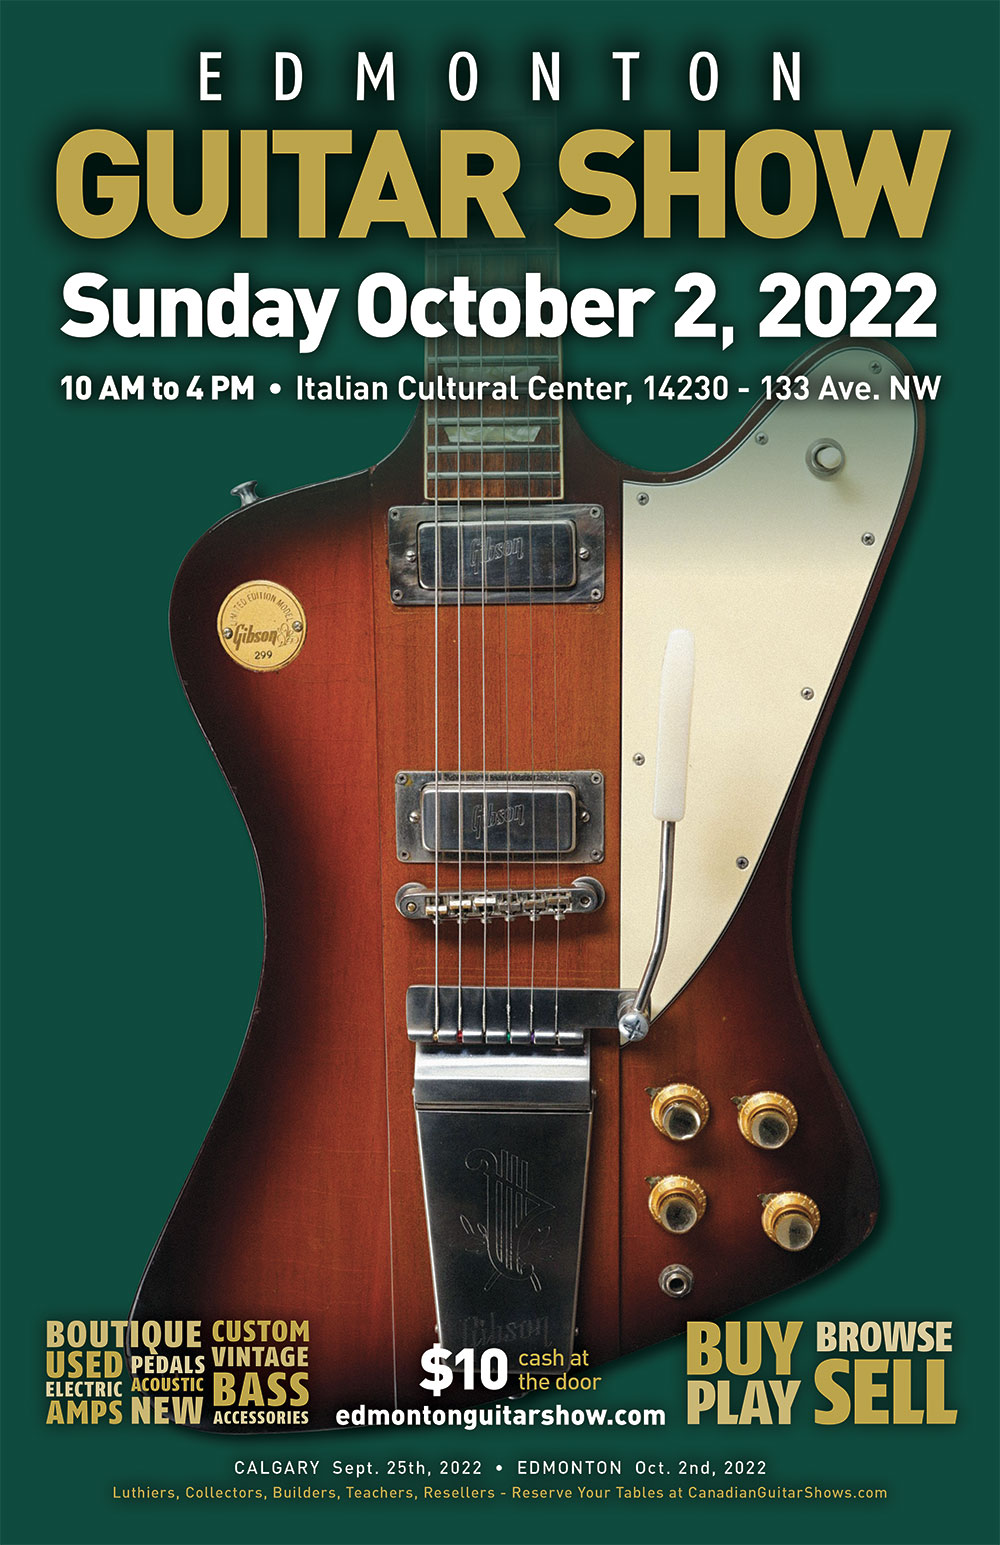 Edmonton Guitar Show, October 2nd 2022, Italian Cultural Center, Edmonton AB